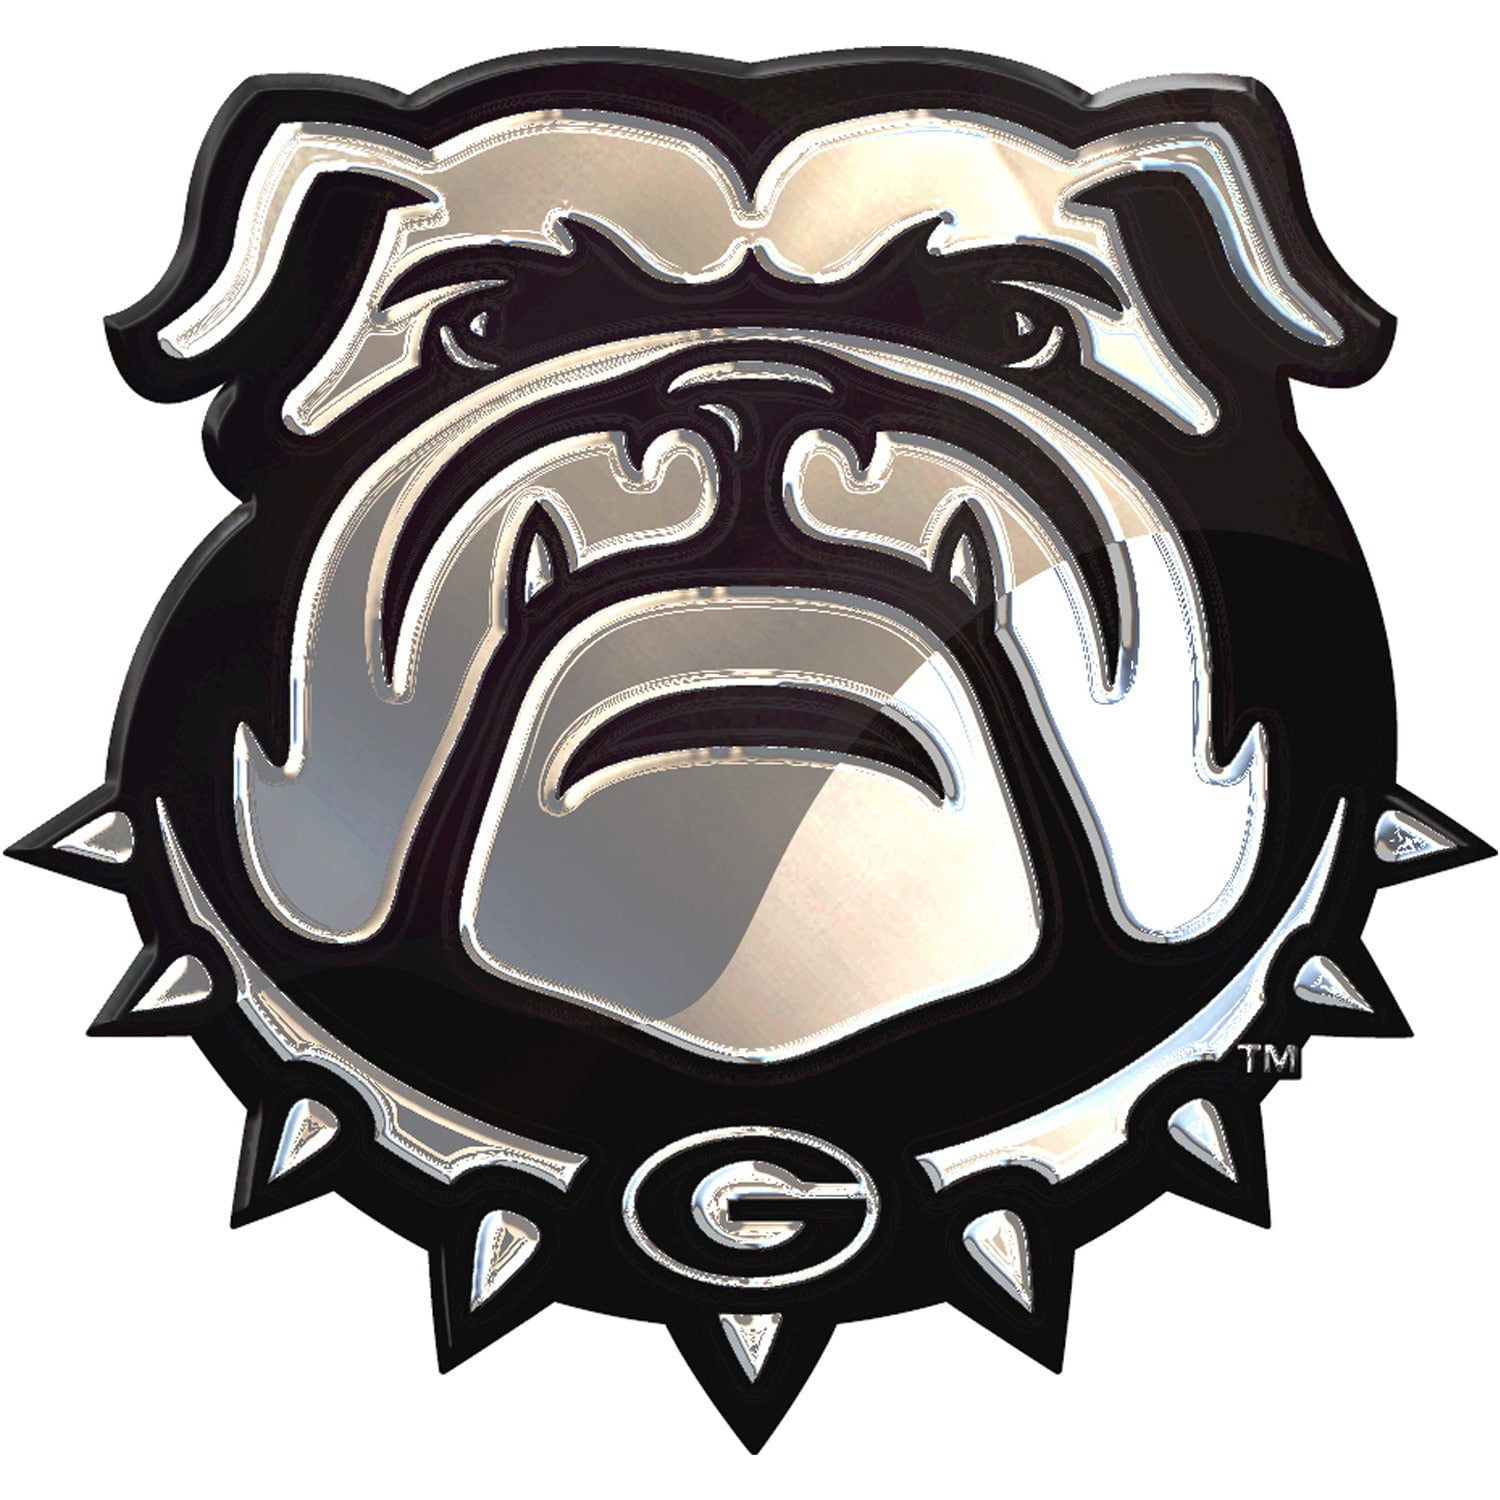 University of Georgia Tire Cover with Bulldogs Logo on Black Vinyl 